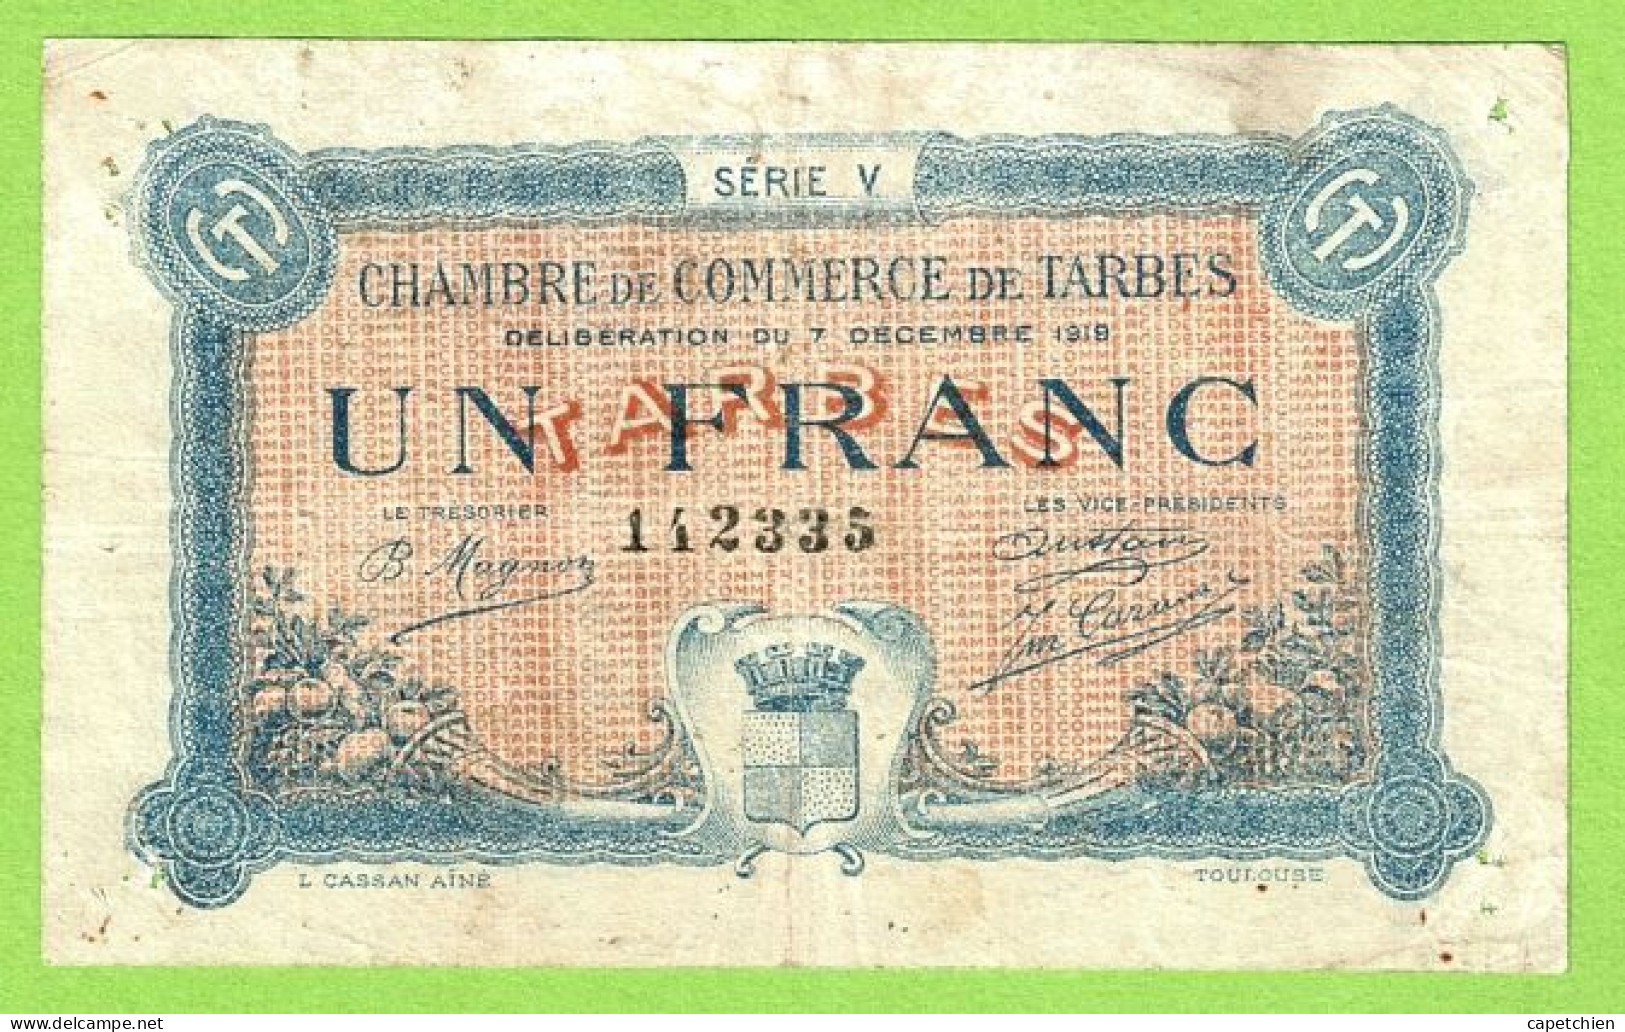 FRANCE / CHAMBRE De COMMERCE / TARBES / 1 FRANC / 7 DECEMBRE 1918 / 142335 / SERIE V - Handelskammer